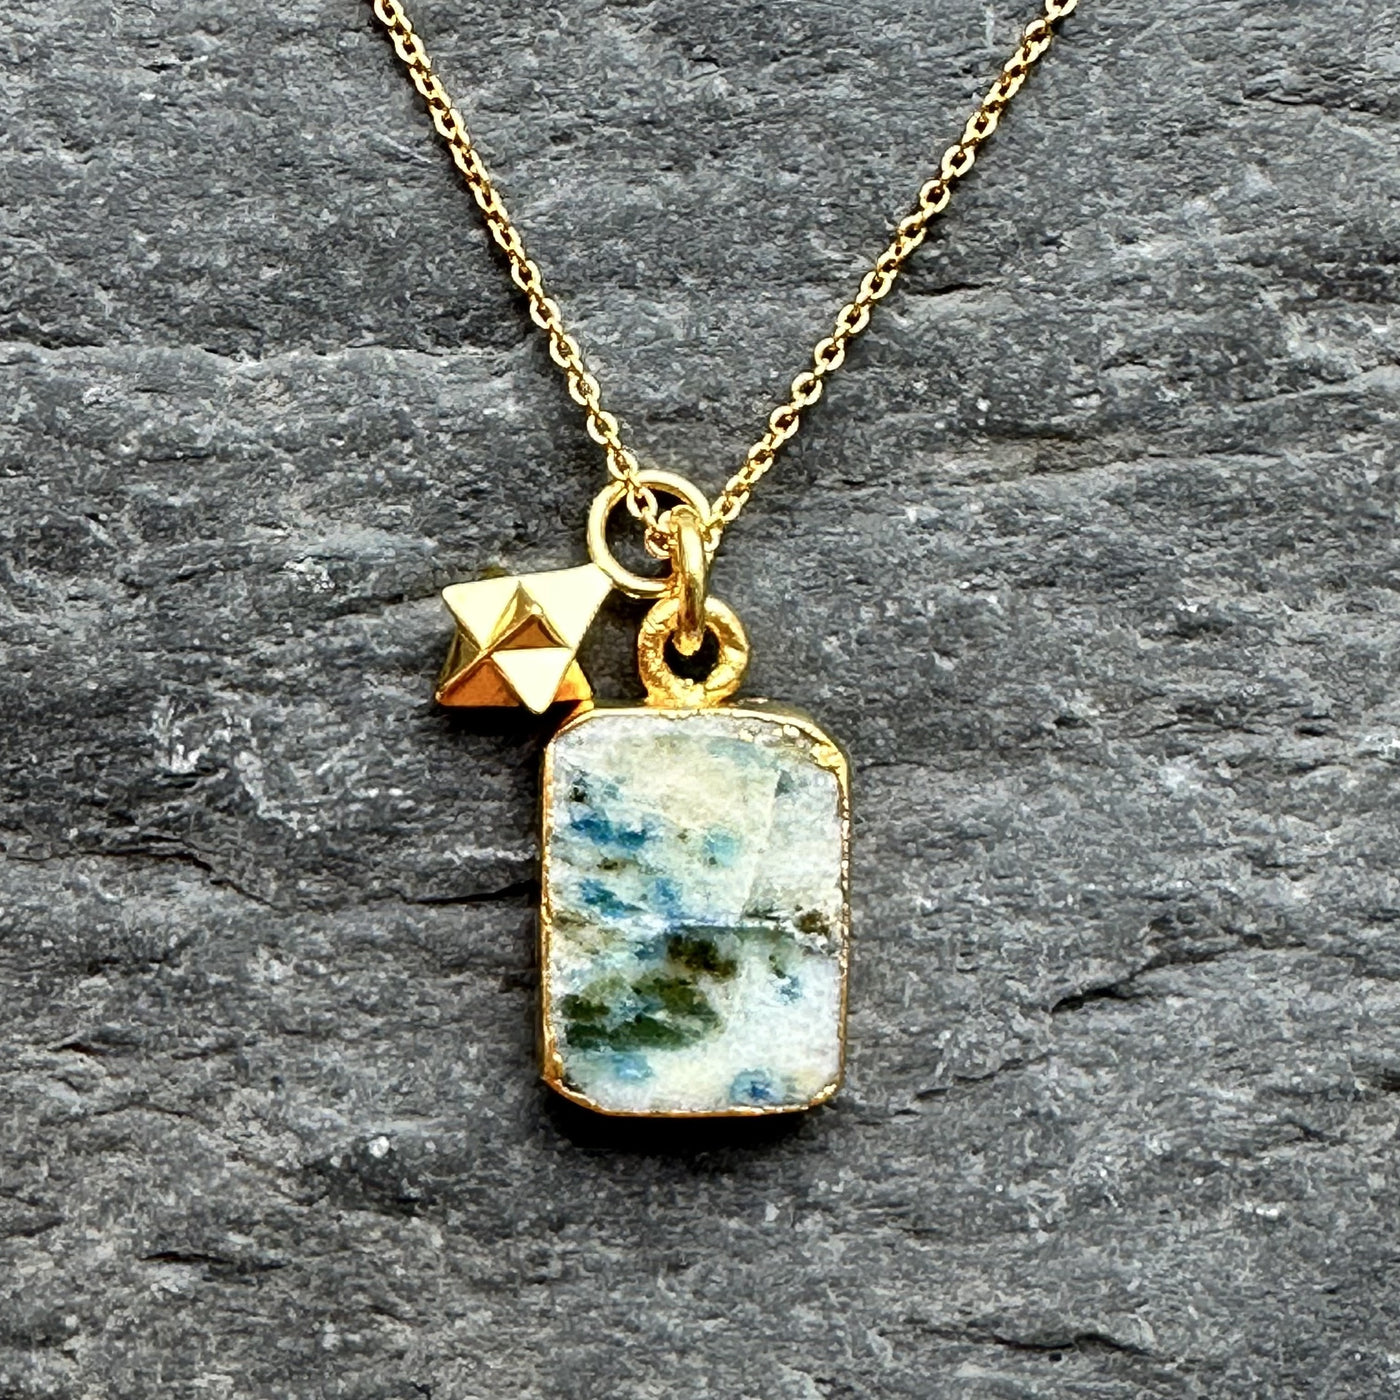 K2 gemstone necklace with tetrahedron charm